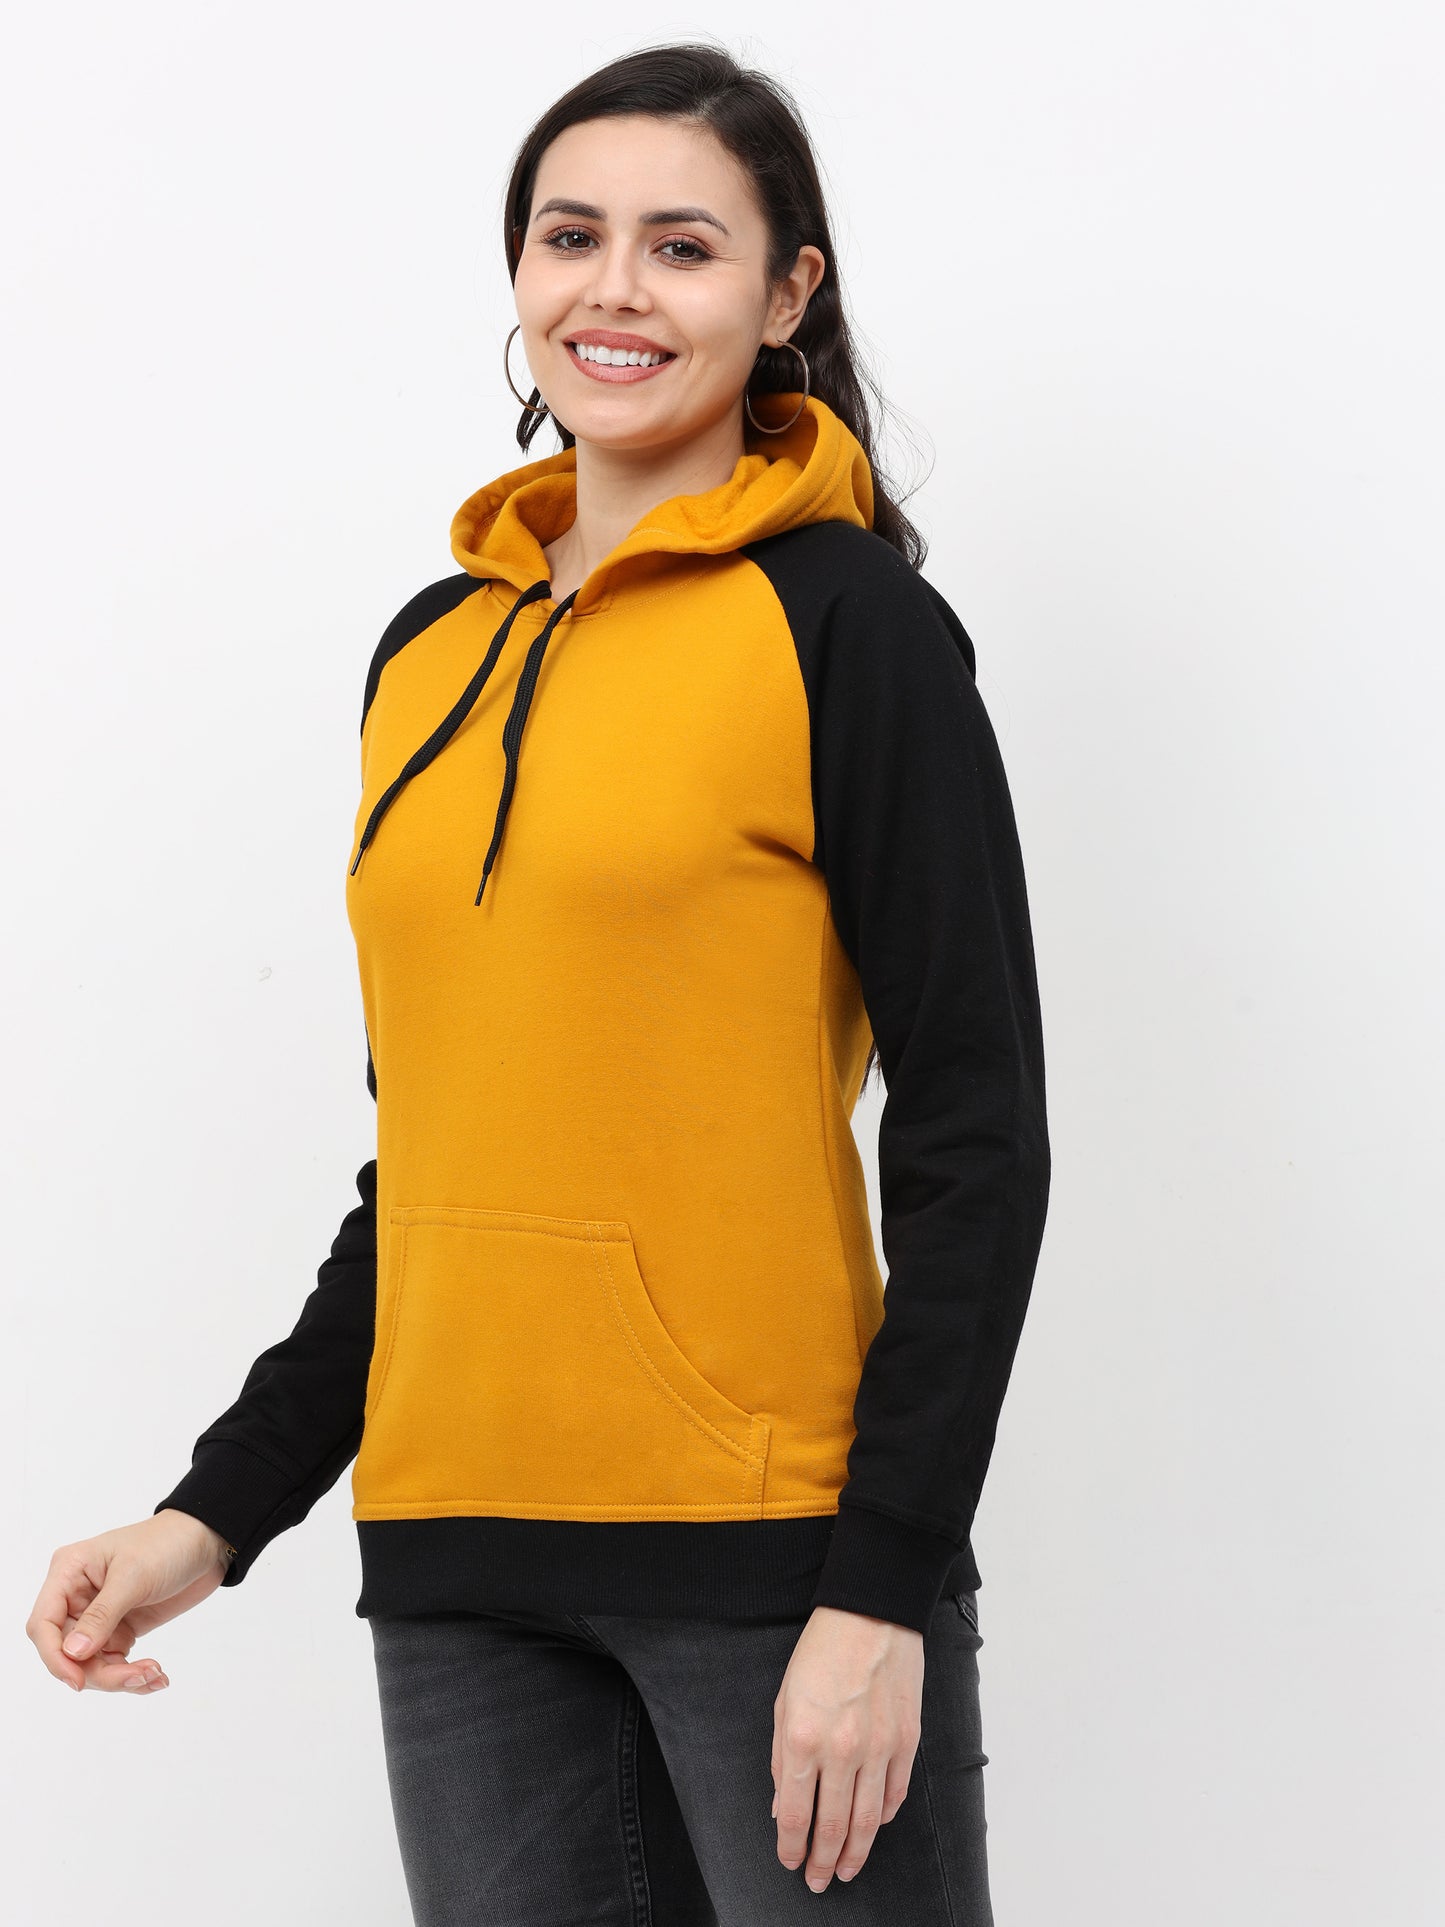 Women's Cotton Color Block Raglan Mustard Yellow & Black Color Full Sleeve Sweatshirt/Hoodies